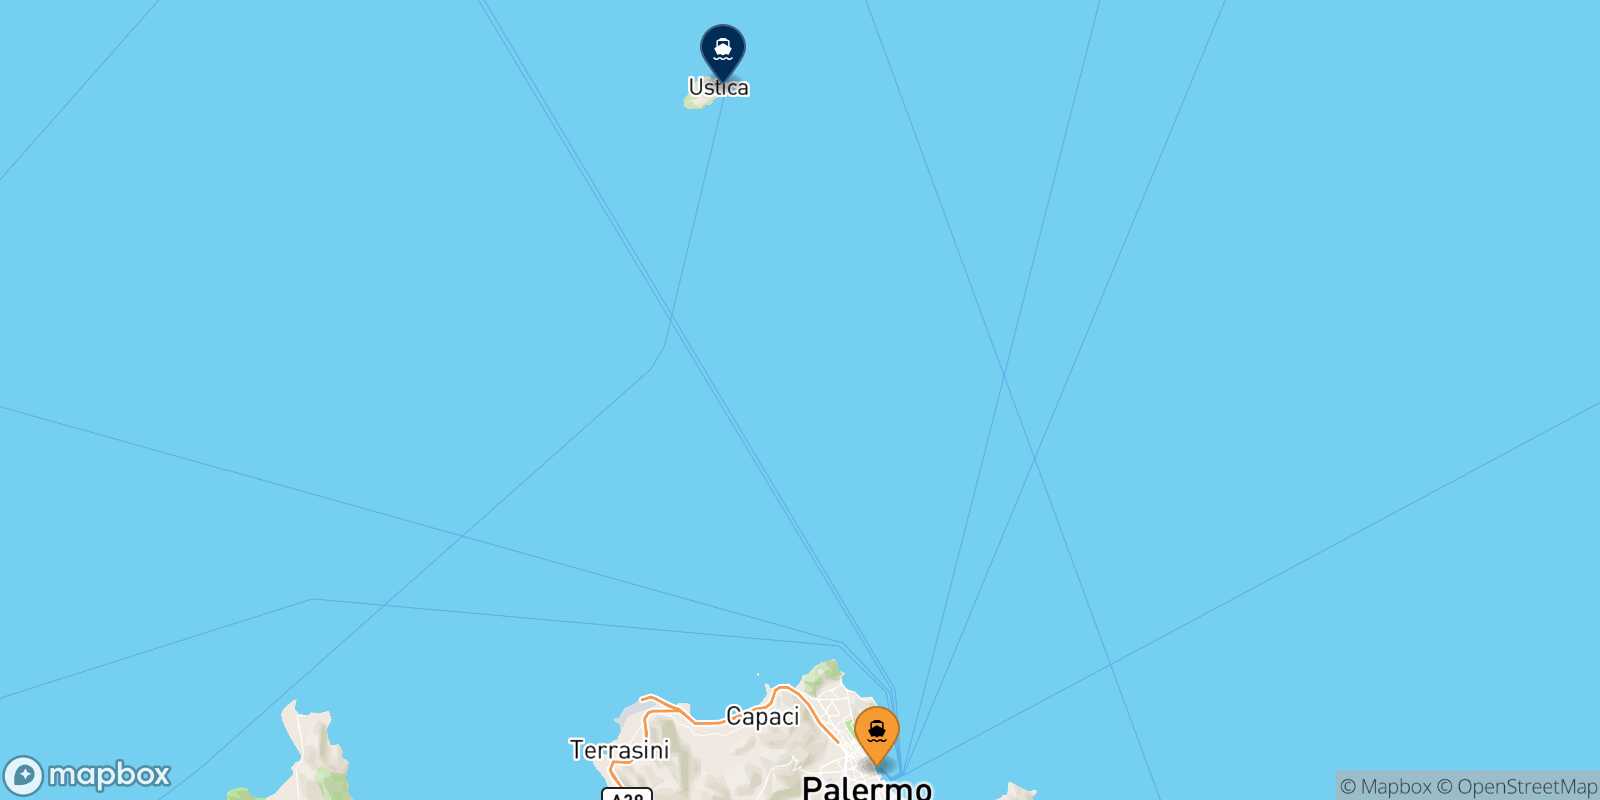 Carte des traverséesPalerme Cala S.maria (Ustica)